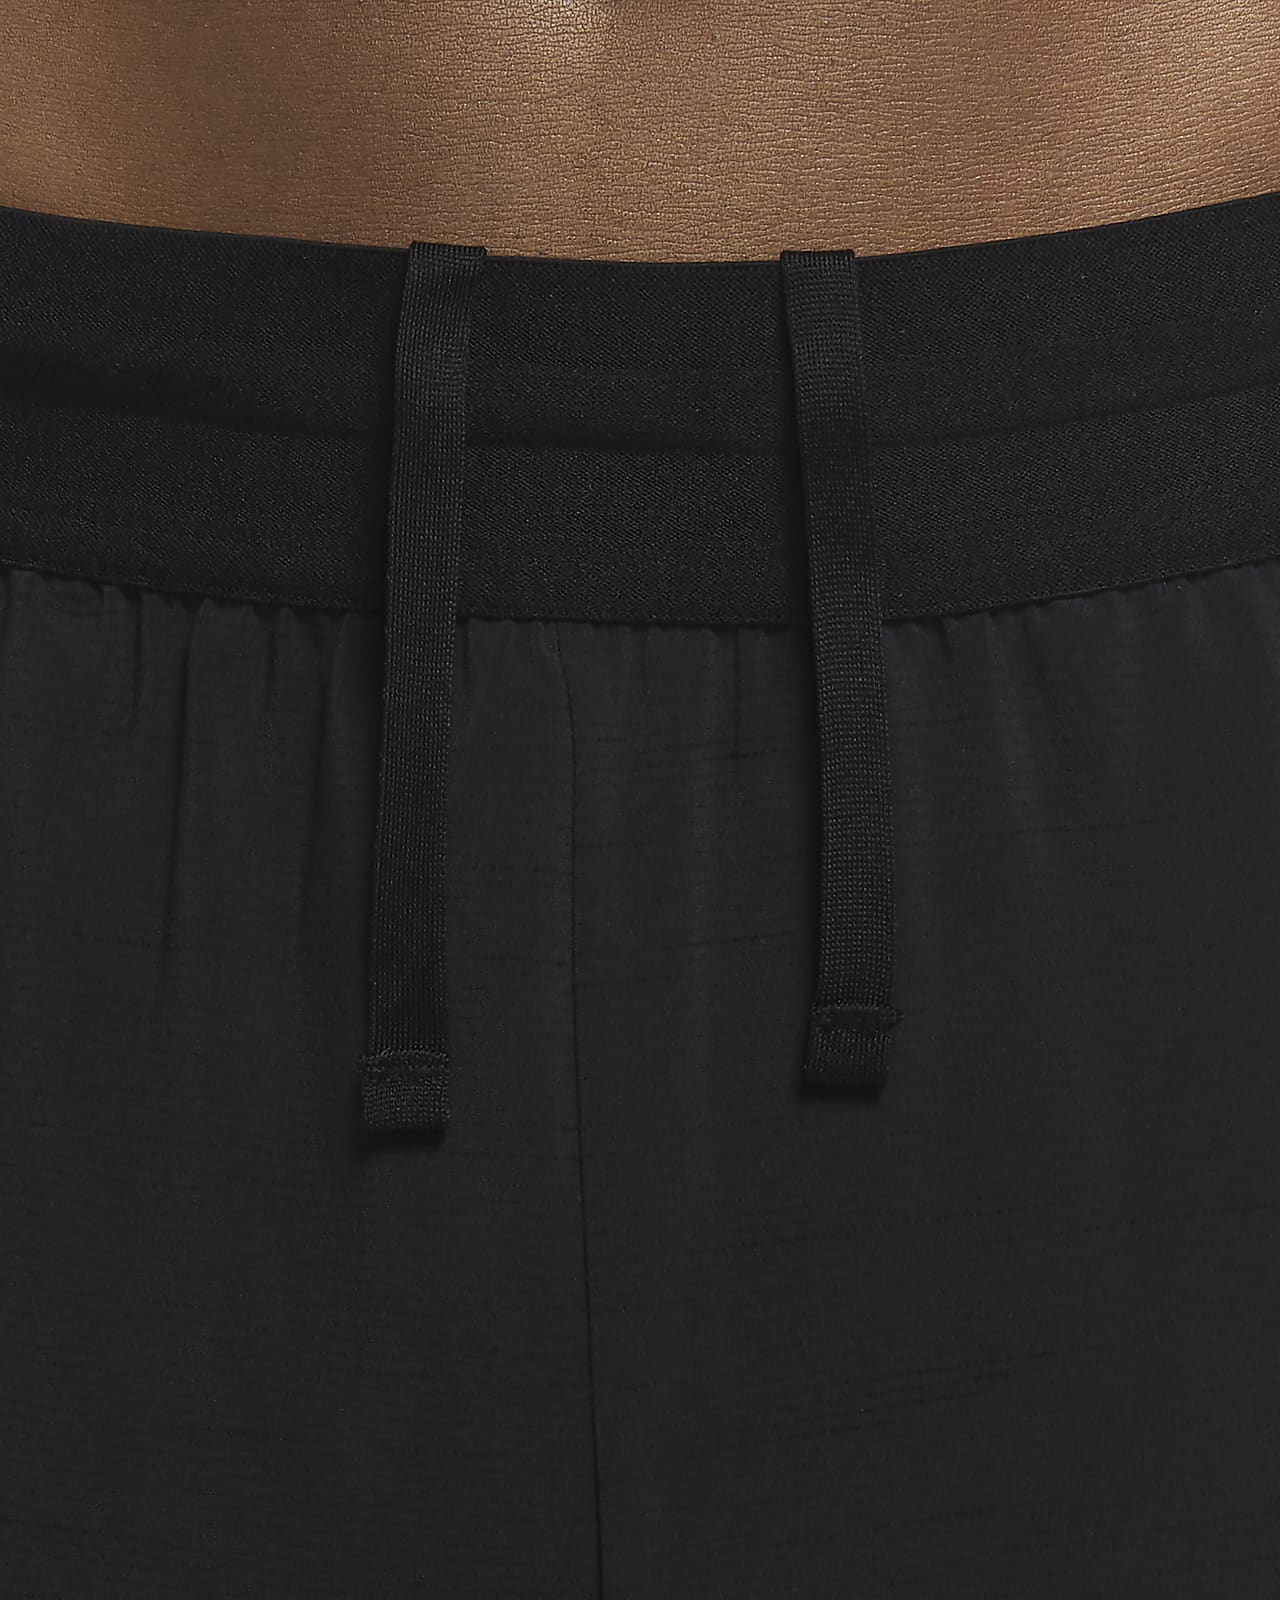 Nike Yoga Mens Pants - 'Black' CU7378-010